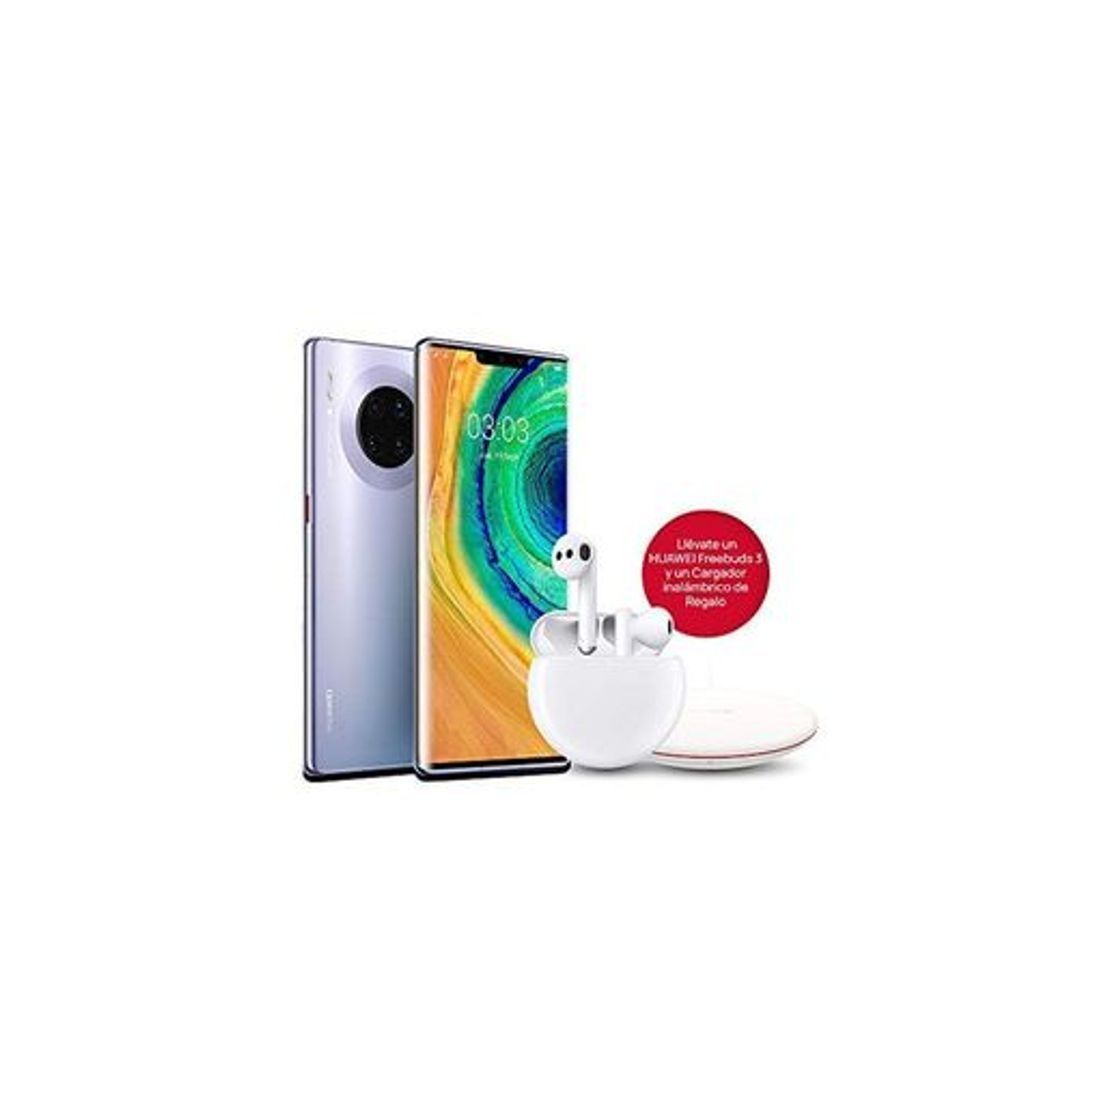 HUAWEI Mate30 Pro - Smartphone con Pantalla Curva de 6.53" (Kirin 990,